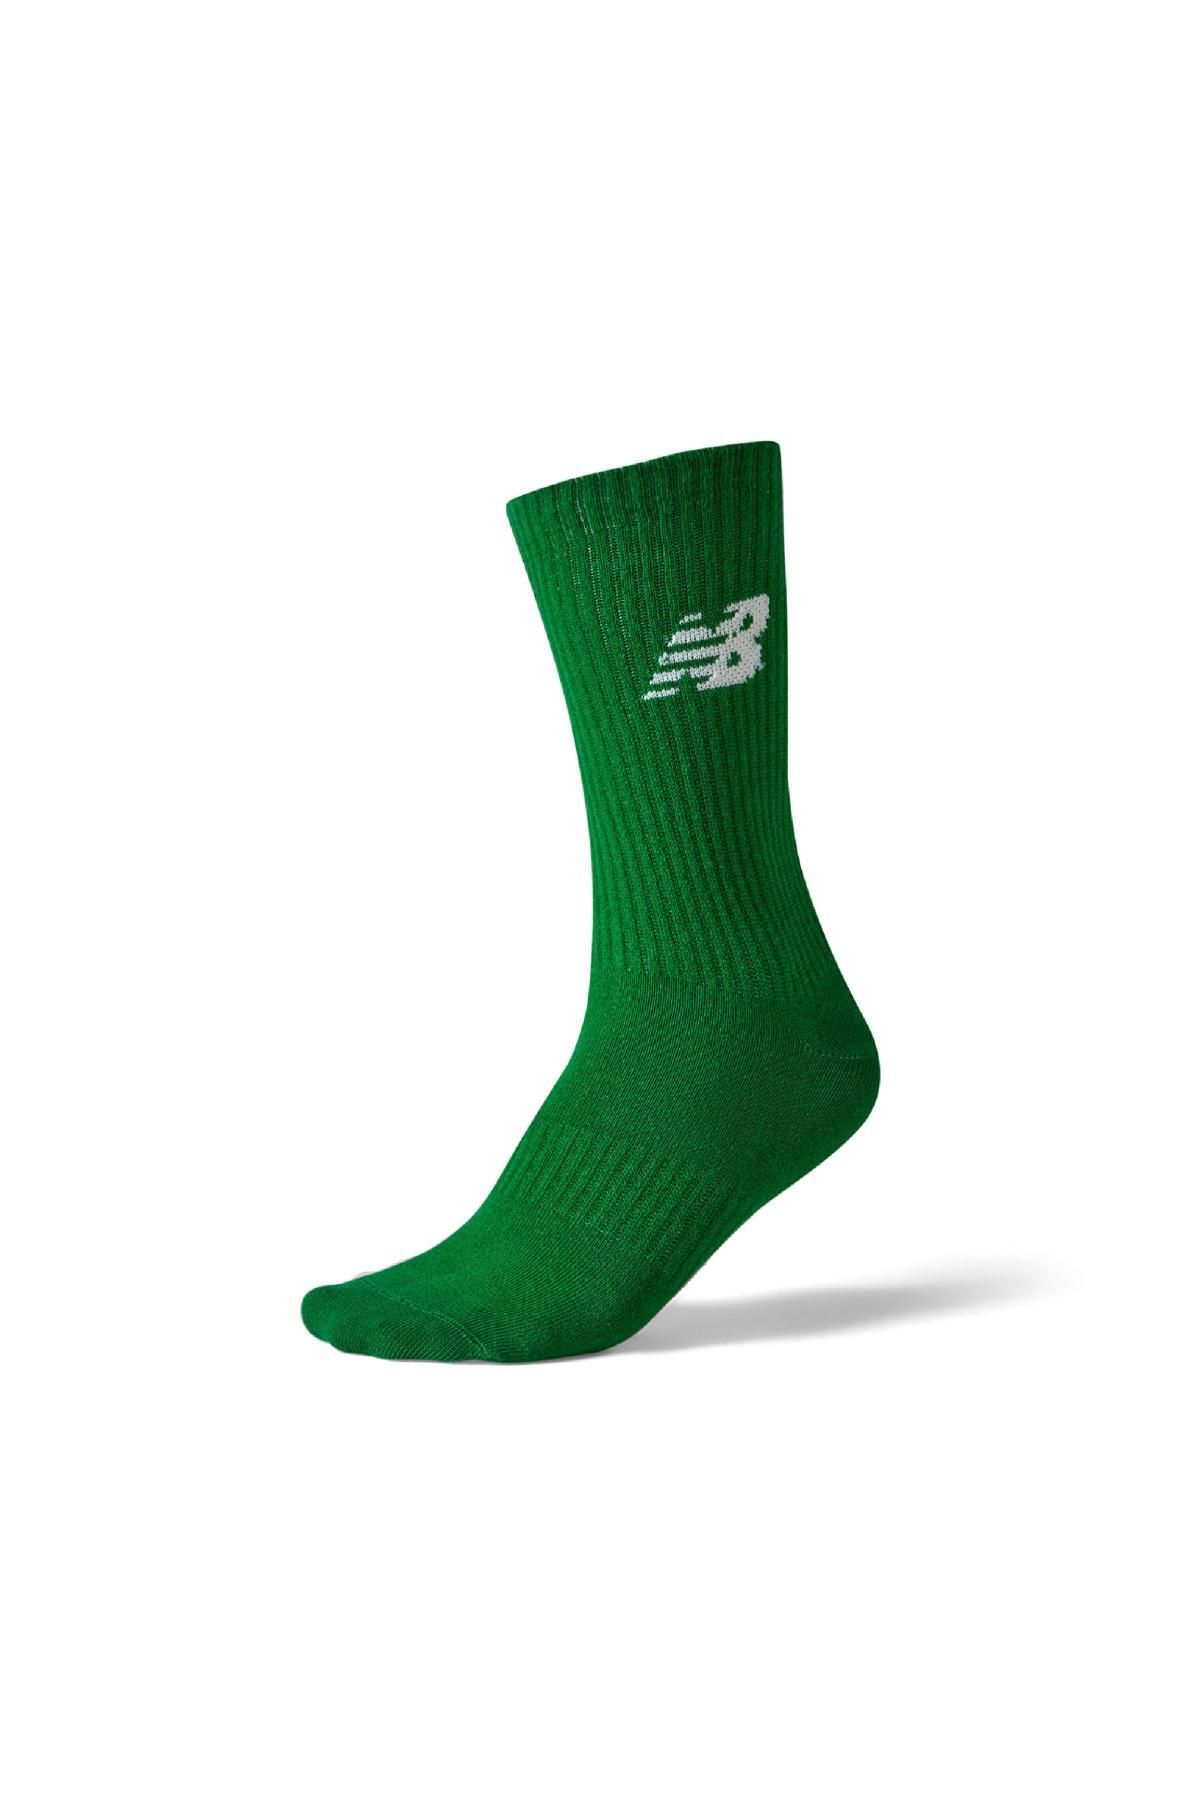 New Balance Ans3206 Nb Lifestyle Çorap Yeşil Unisex Çorap